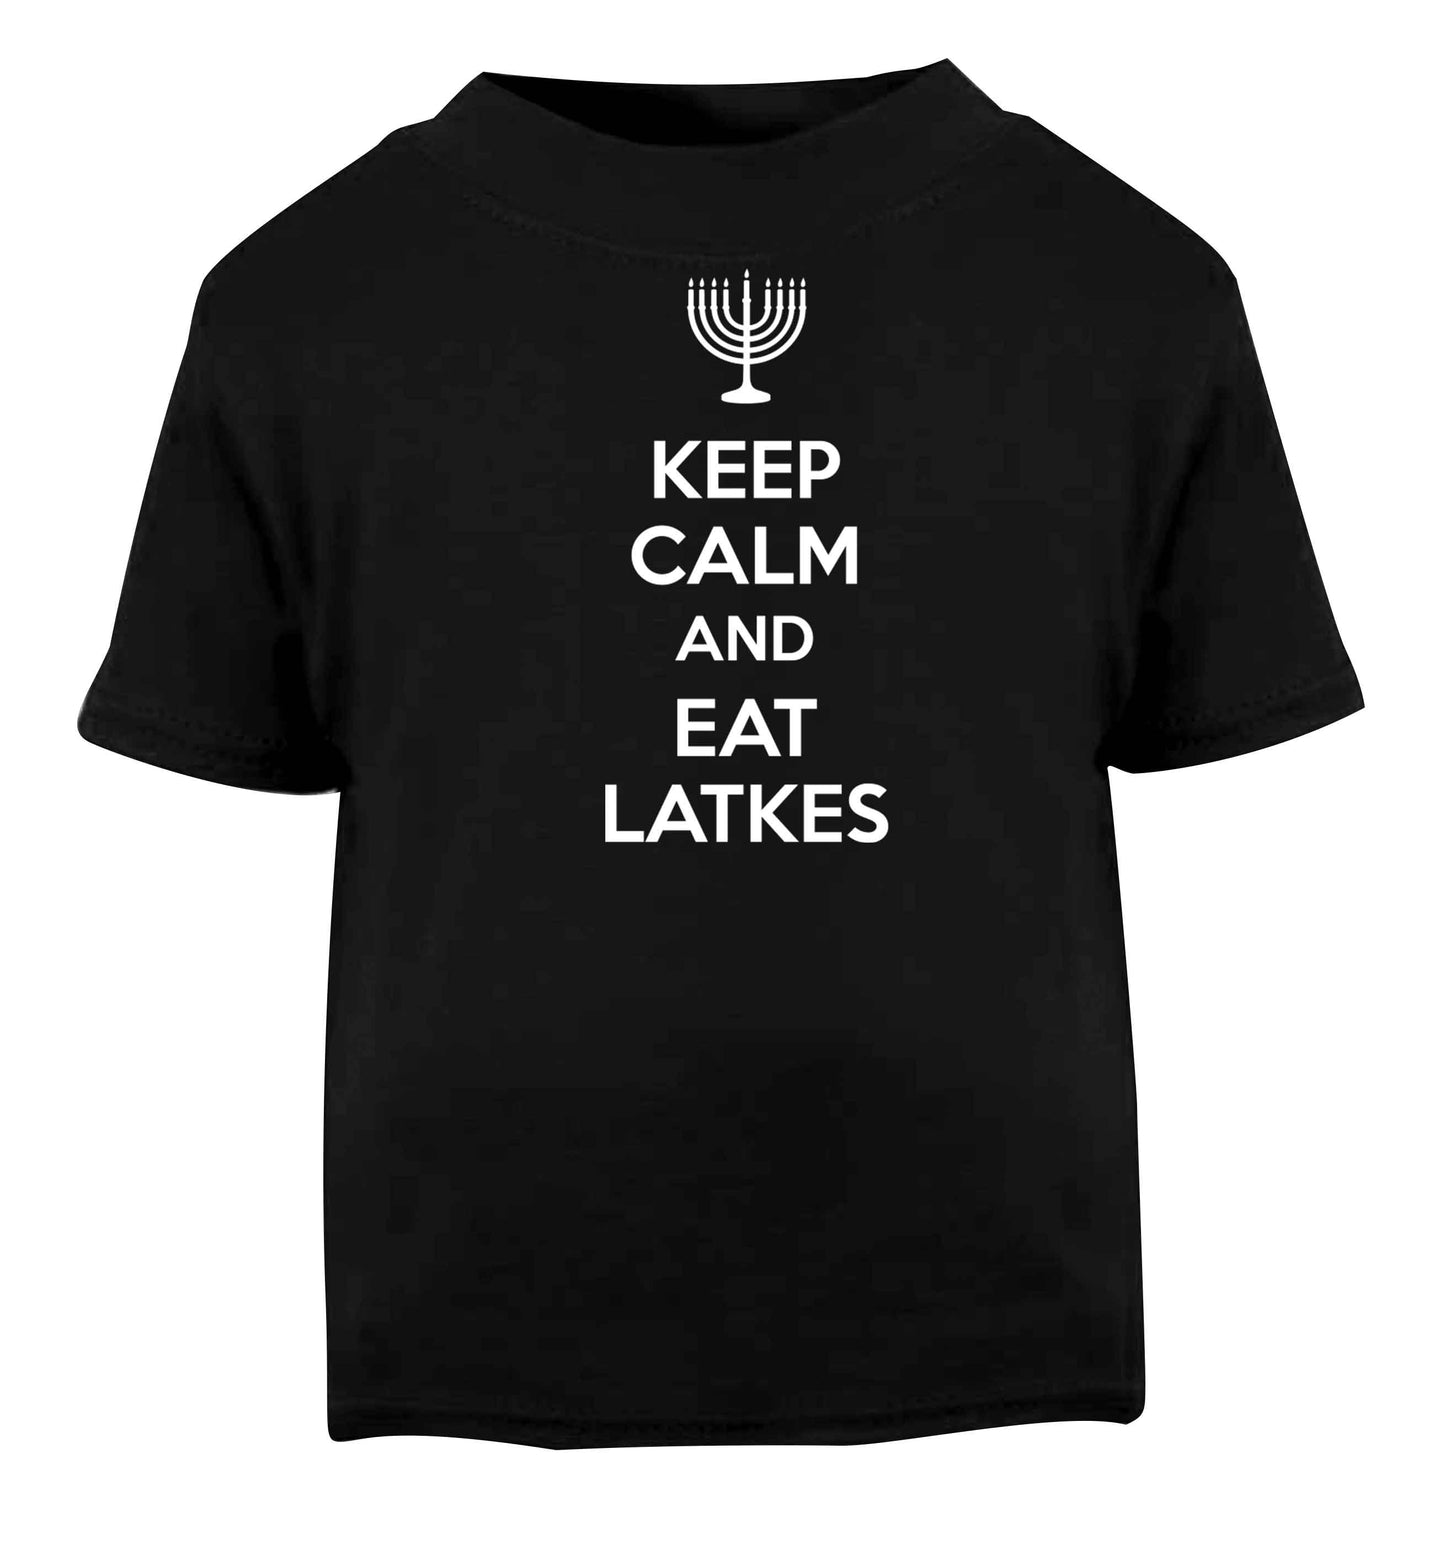 Keep calm and eat latkes Black baby toddler Tshirt 2 years